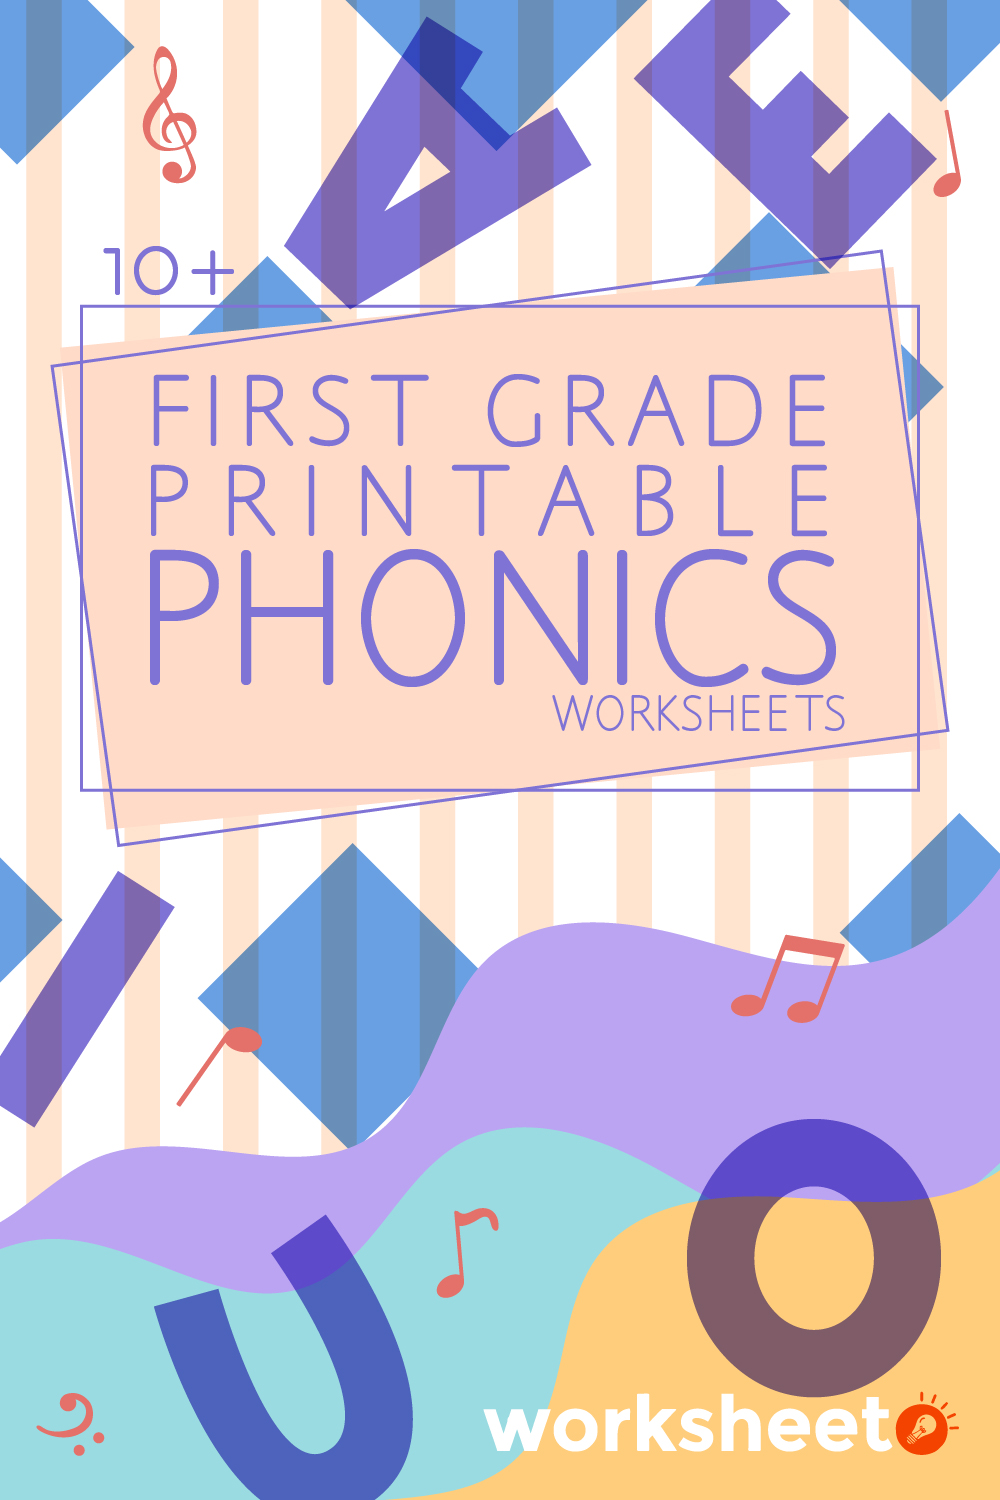 First Grade Printable Phonics Worksheets